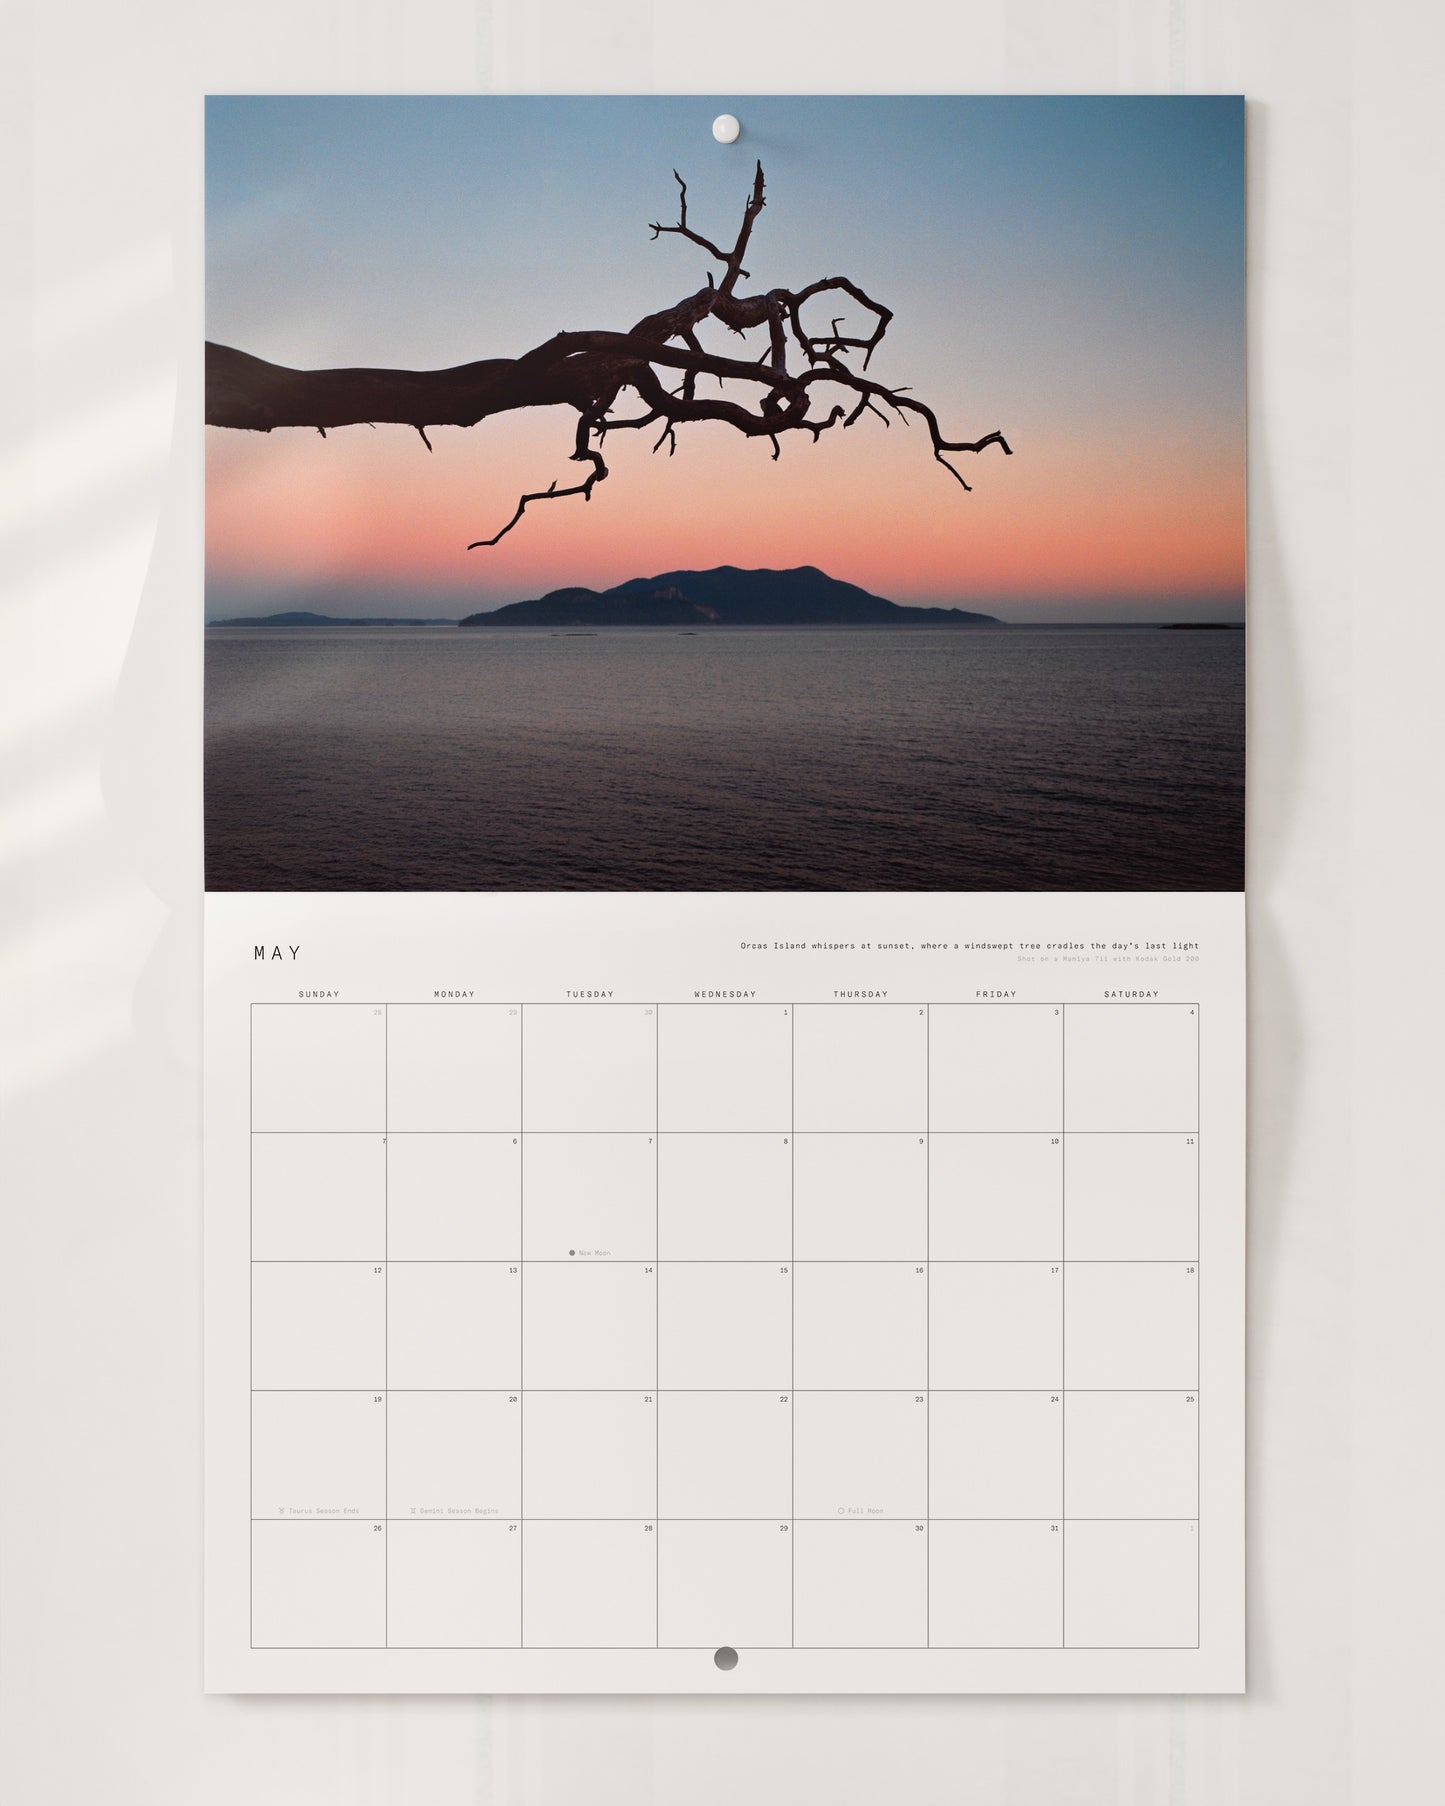 2024 Photography Calendar